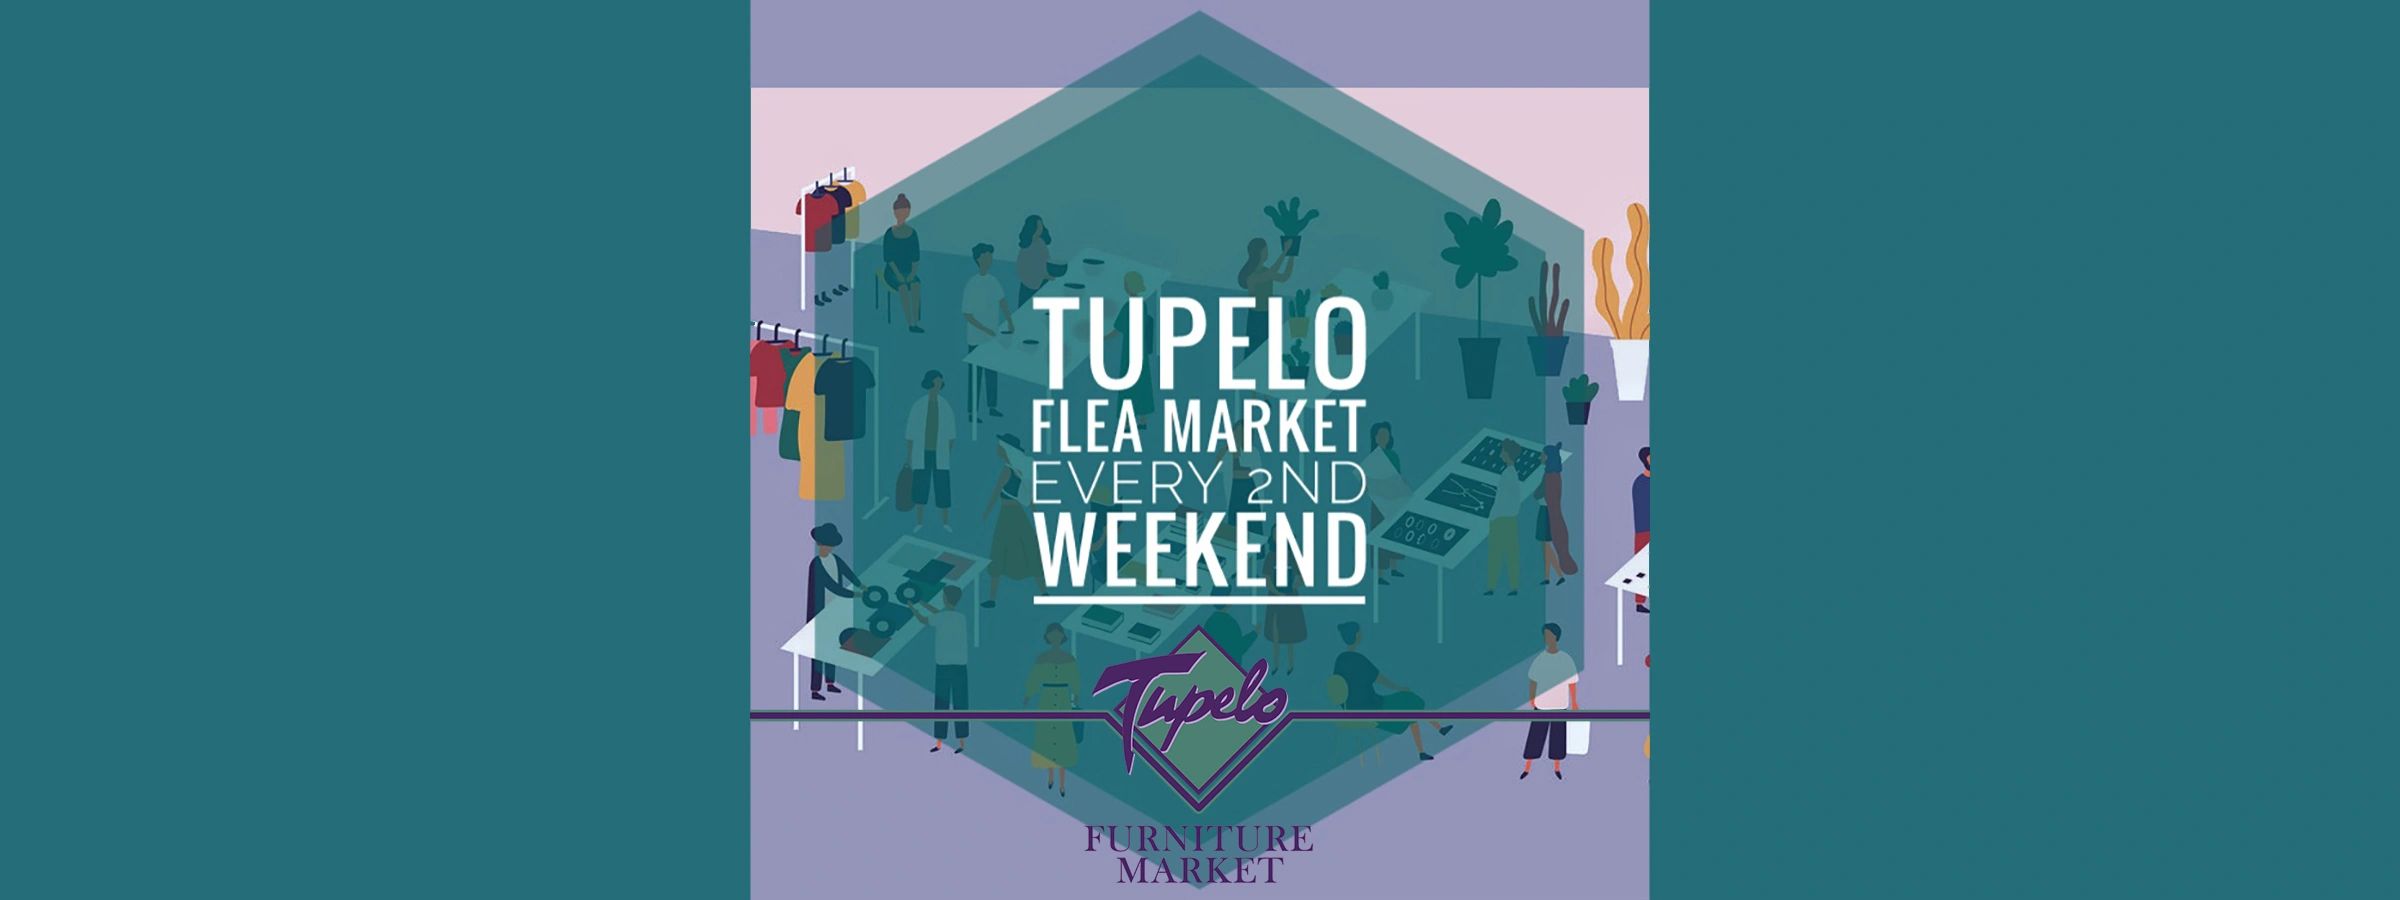 Calendar Tupelo Flea Market